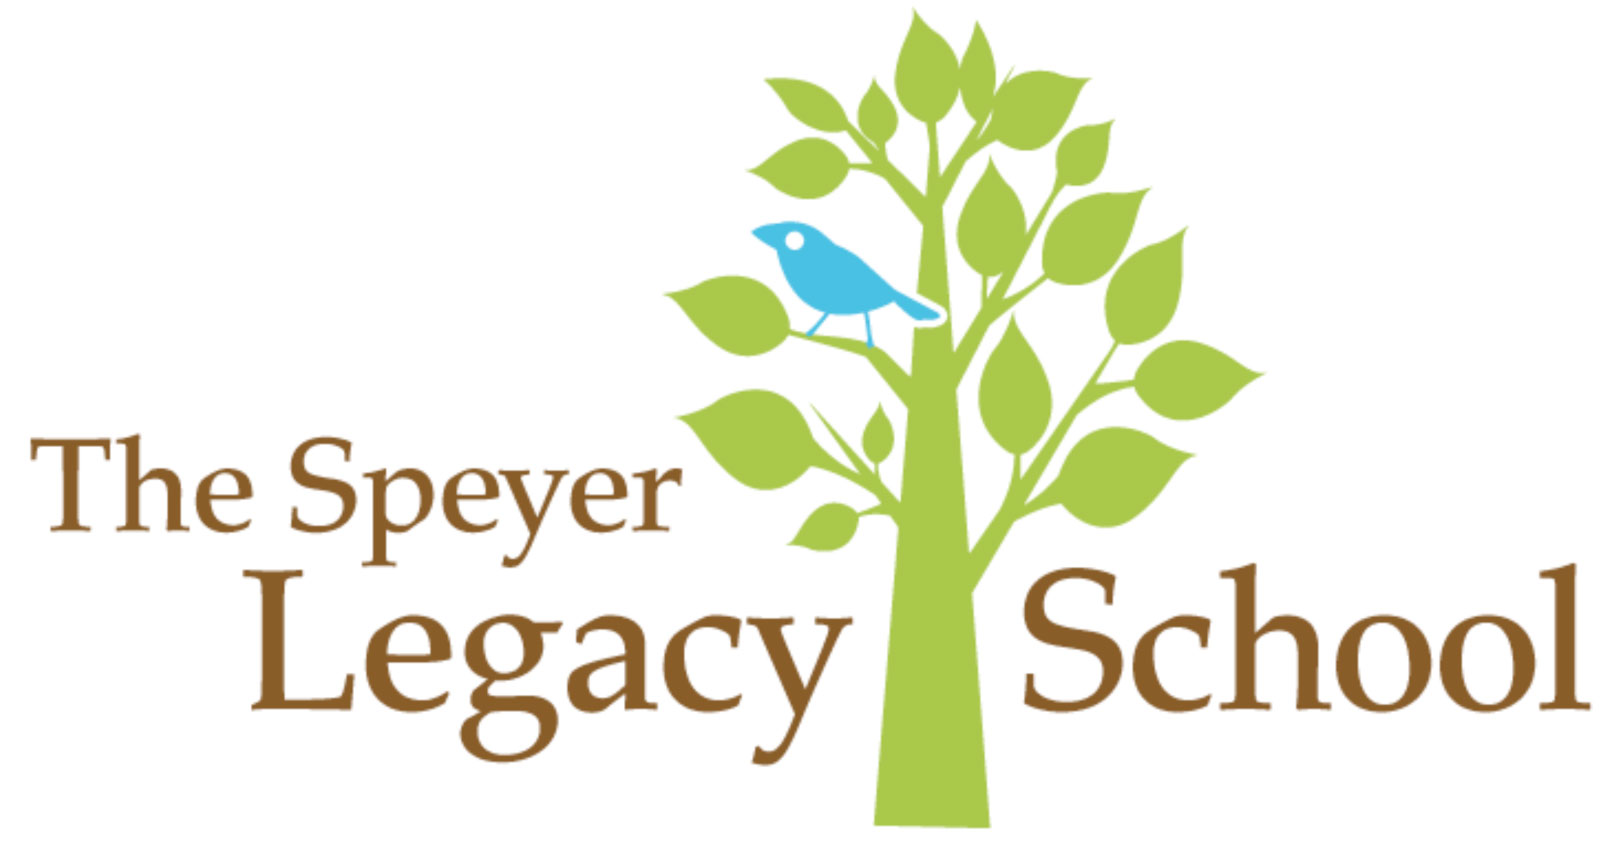 Speyer Legacy School (The)